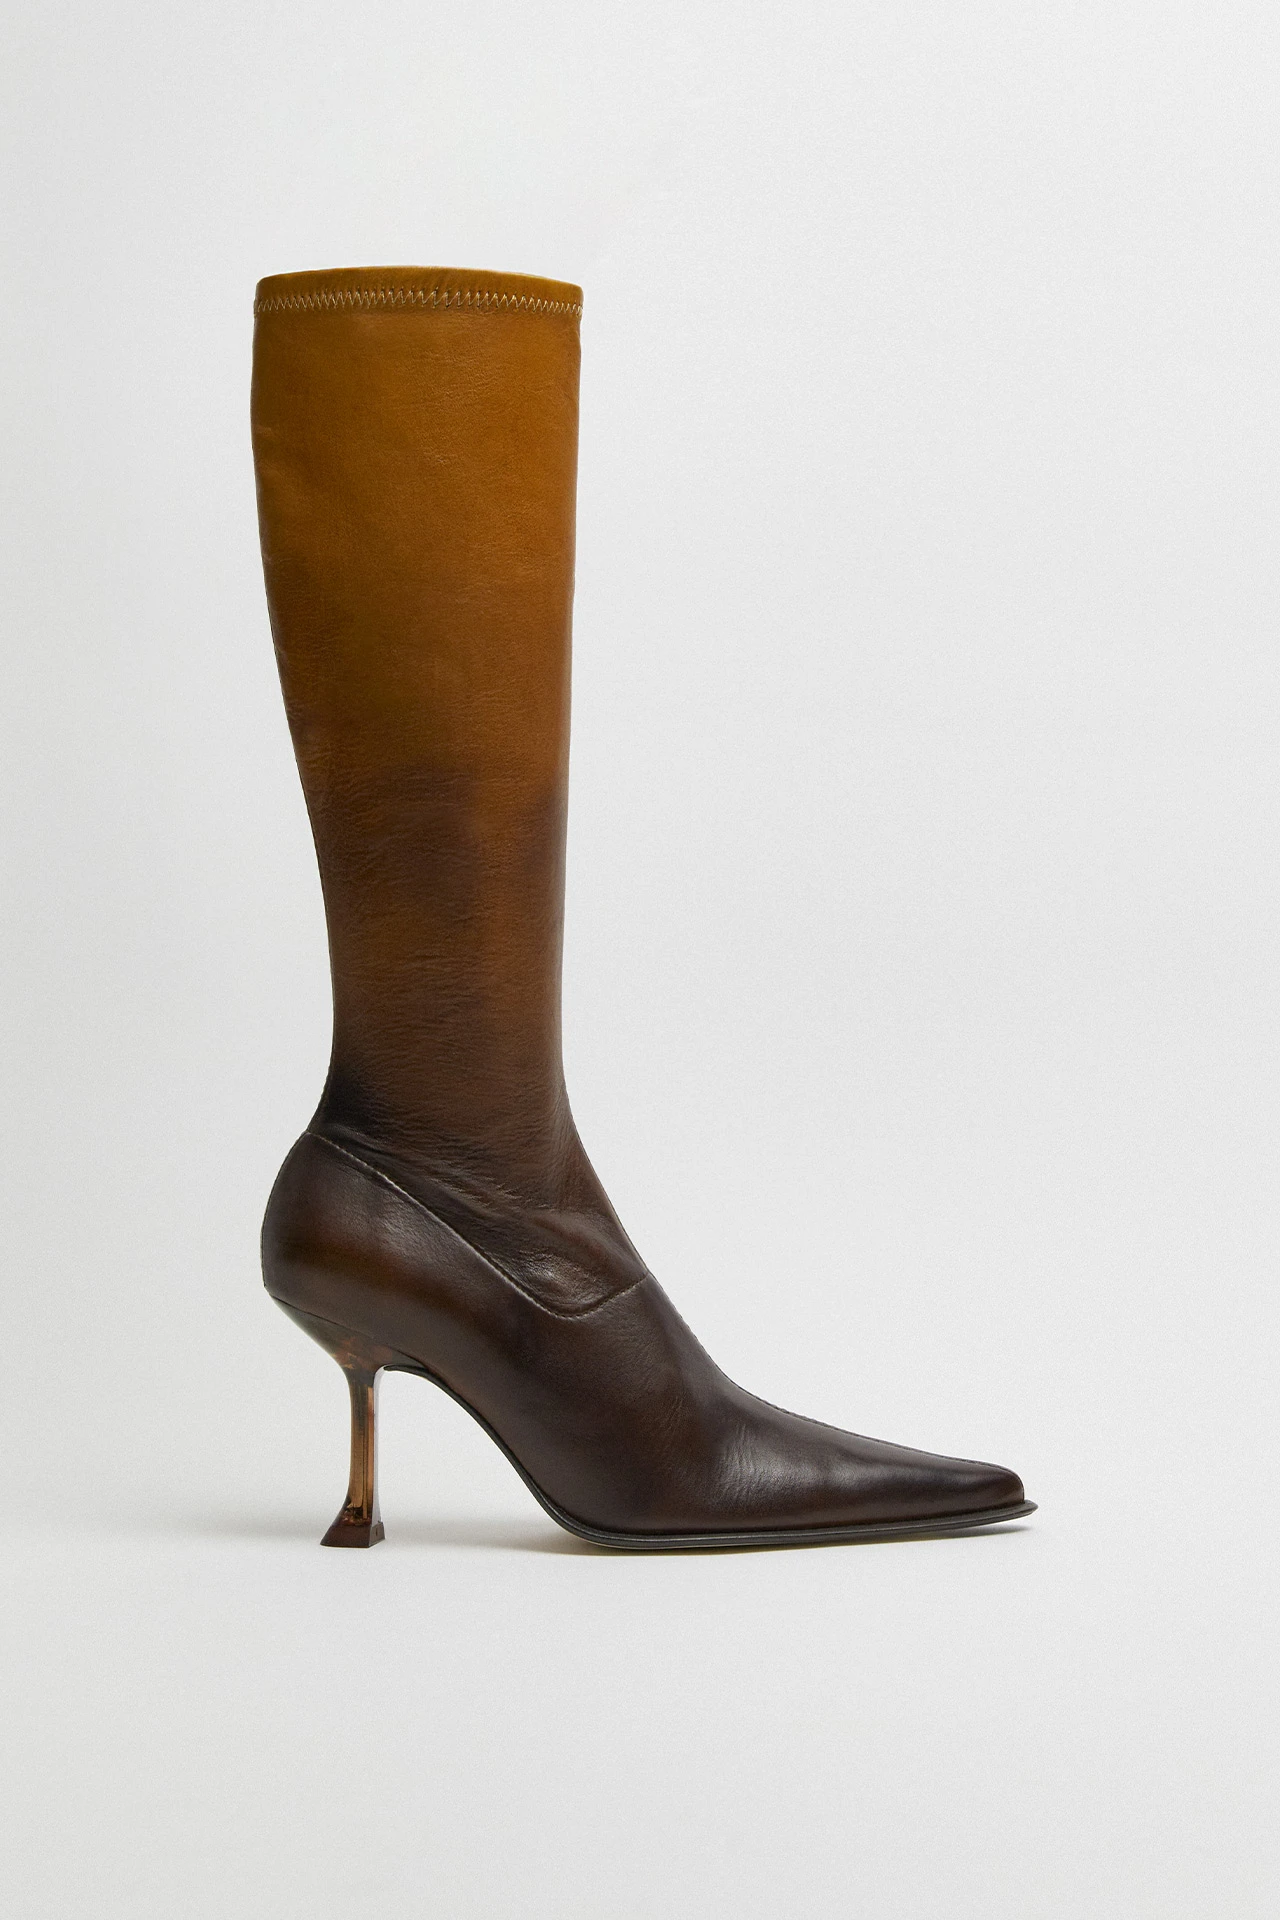 Miista-Carlita-Brown-Tall-Boots-01